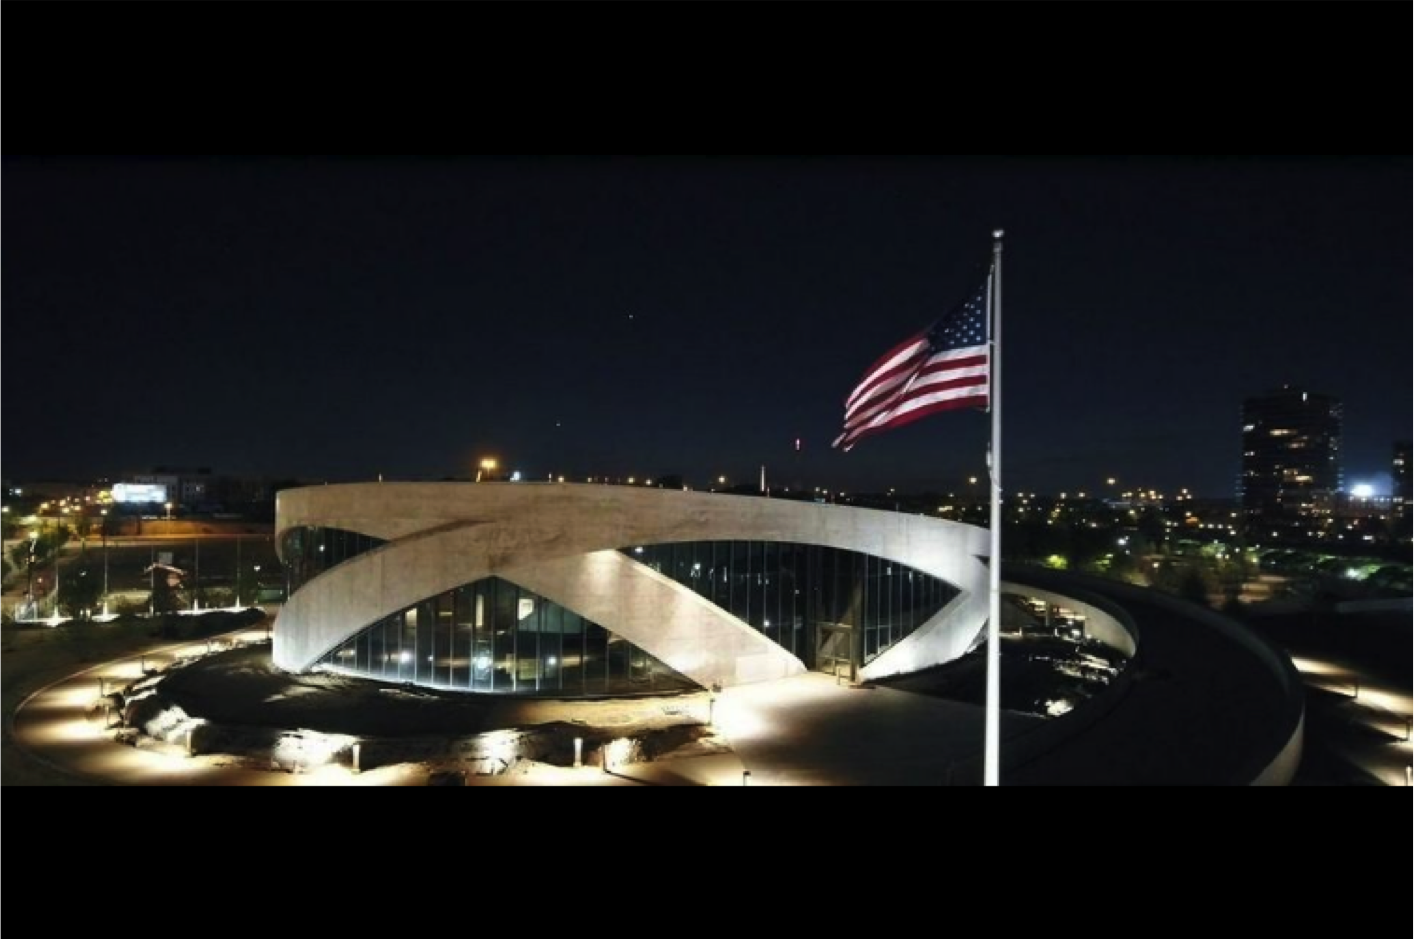 Exterior view of National Veterans Memorial Museum and American flag lit at night